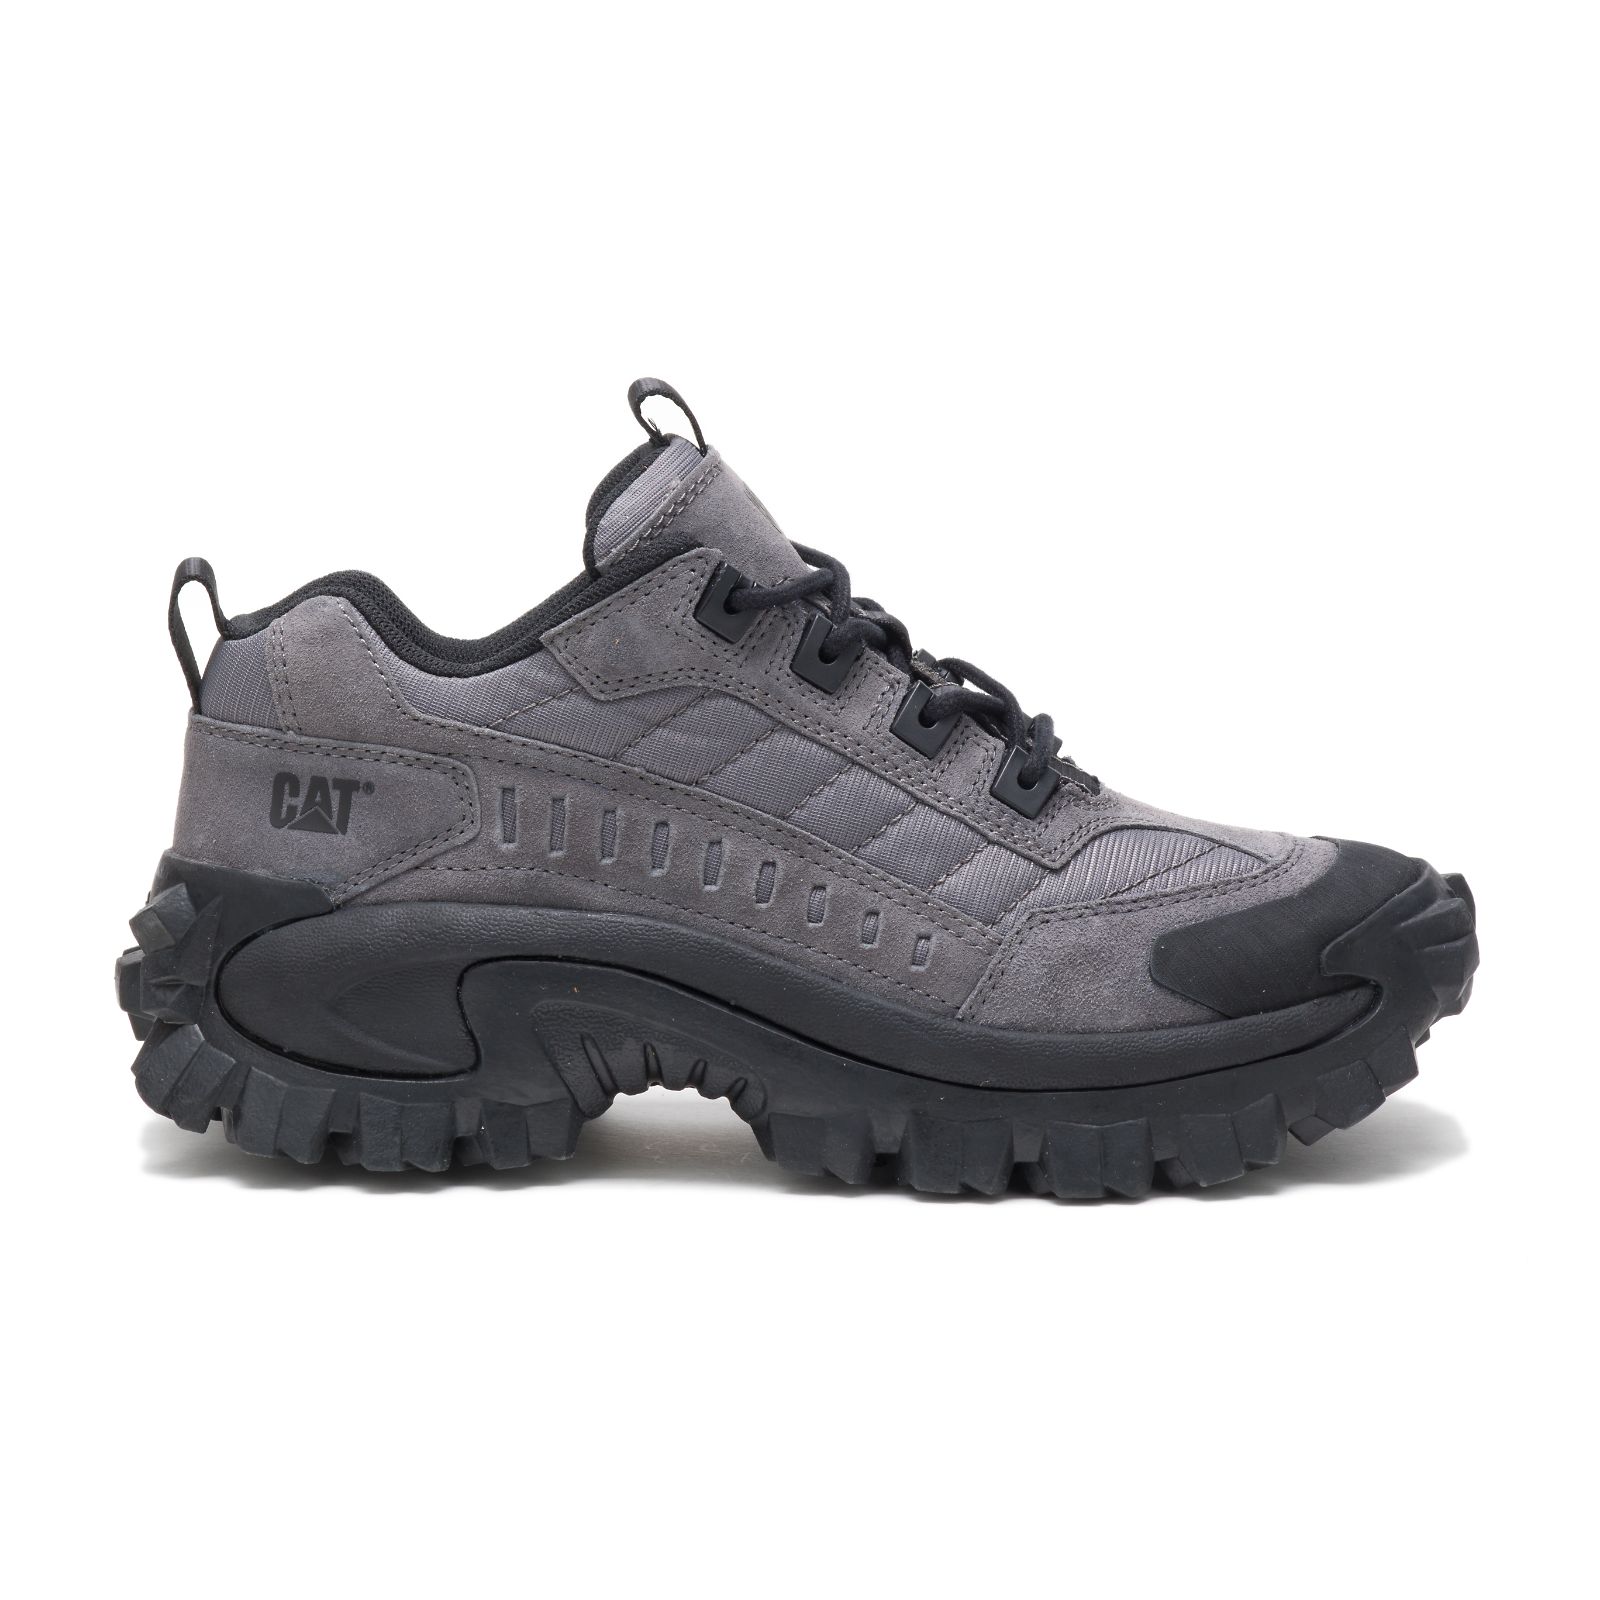 Caterpillar Sneakers UAE Online - Caterpillar Intruder Mens - deep grey/Black CTEBLY804